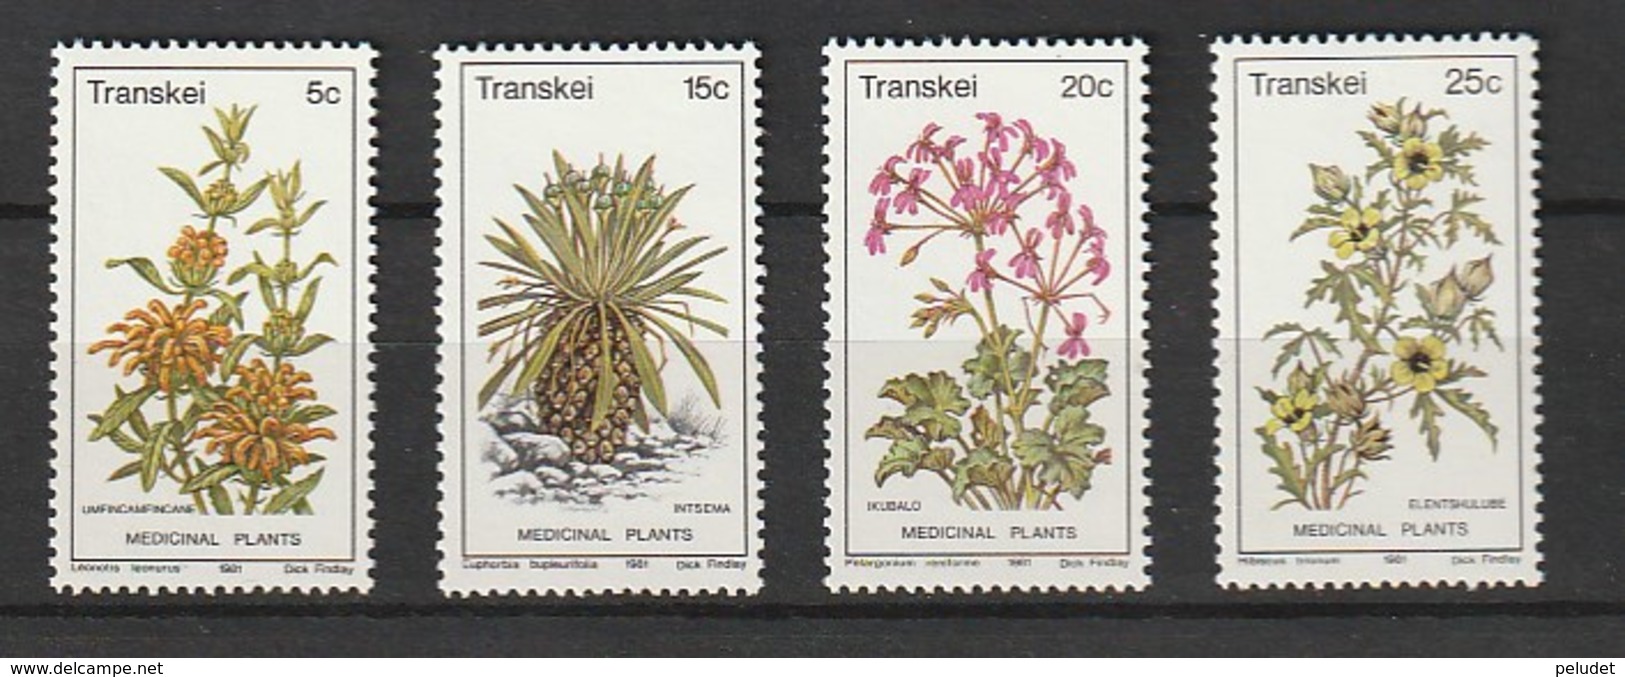 Transkei 1981, Medical Plants 4v ** Mi 88-91, Sn 32-35, Yt 88-91, Sg 88-91 - Transkei